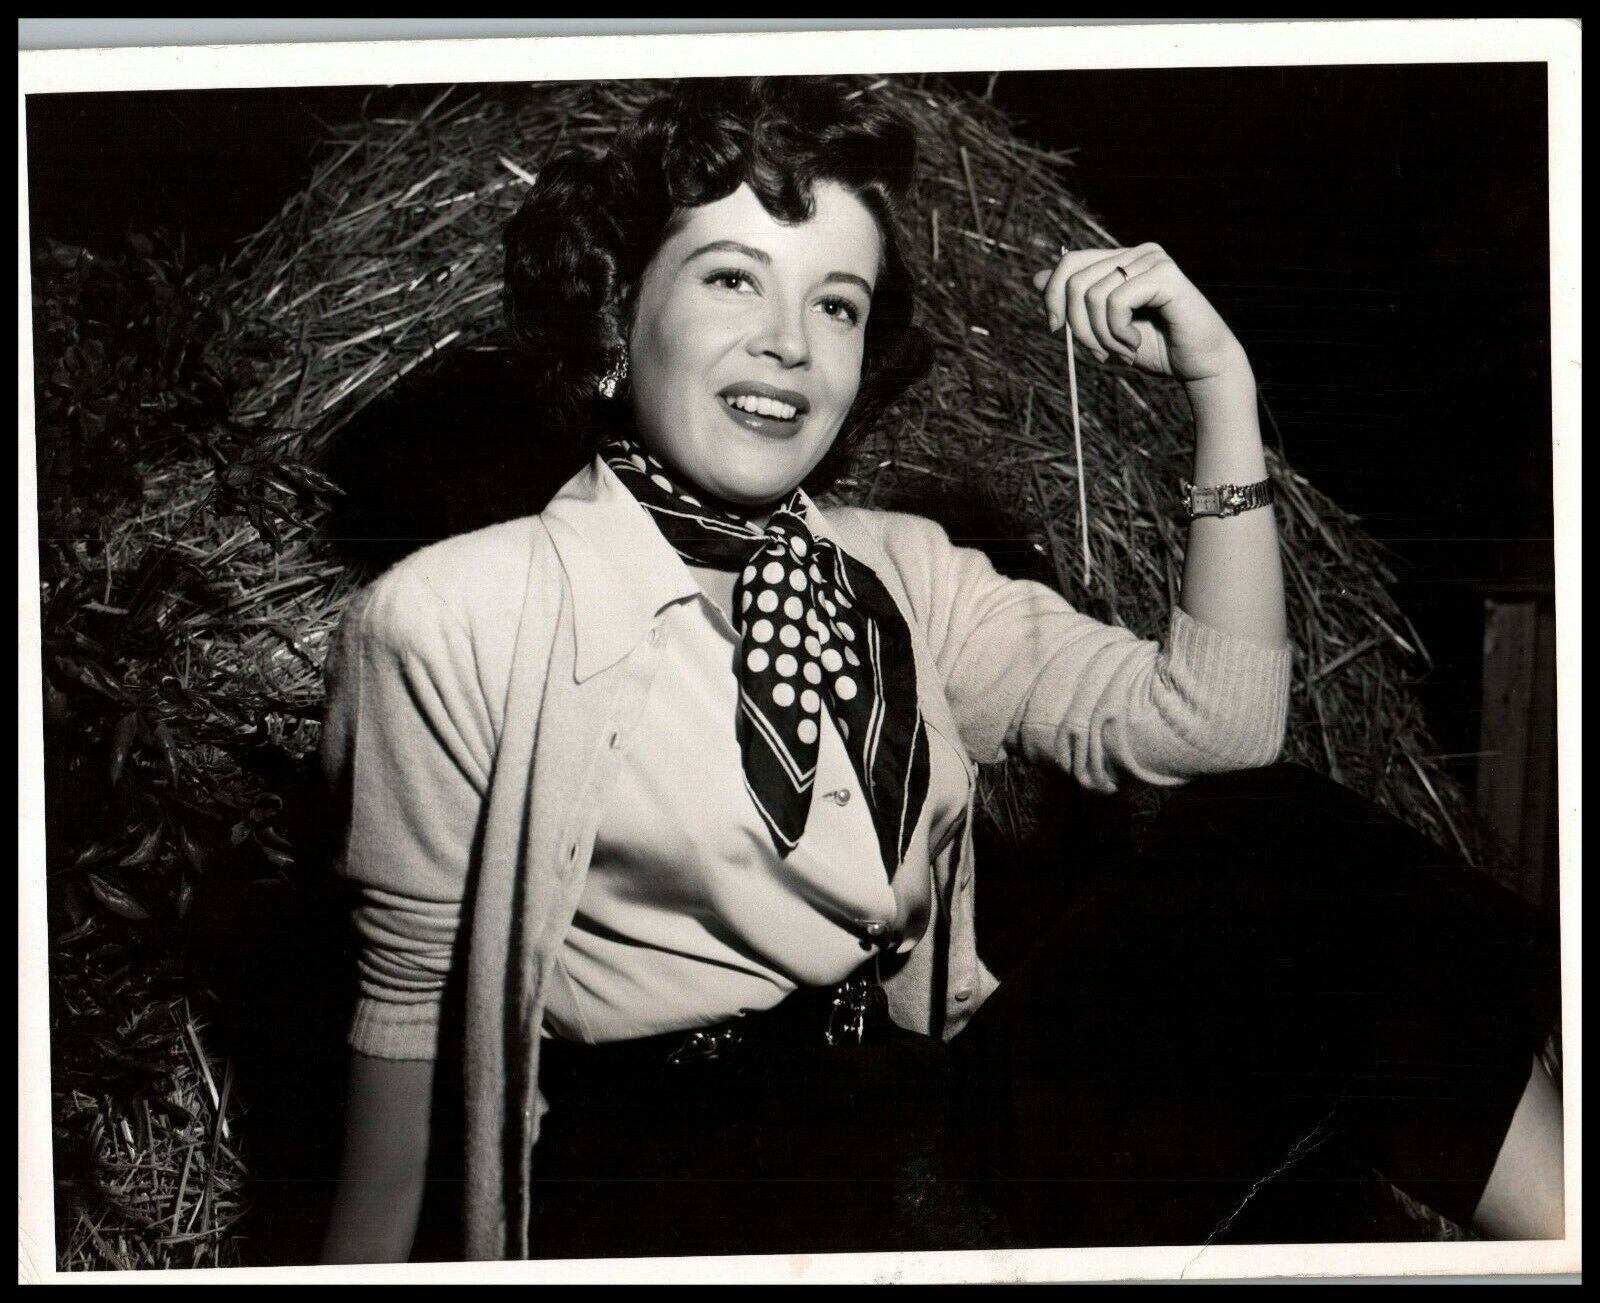 Hollywood Beauty GLORIA DE HAVEN 1950 STUNNING PORTRAIT SUMMER STOCK Photo 526